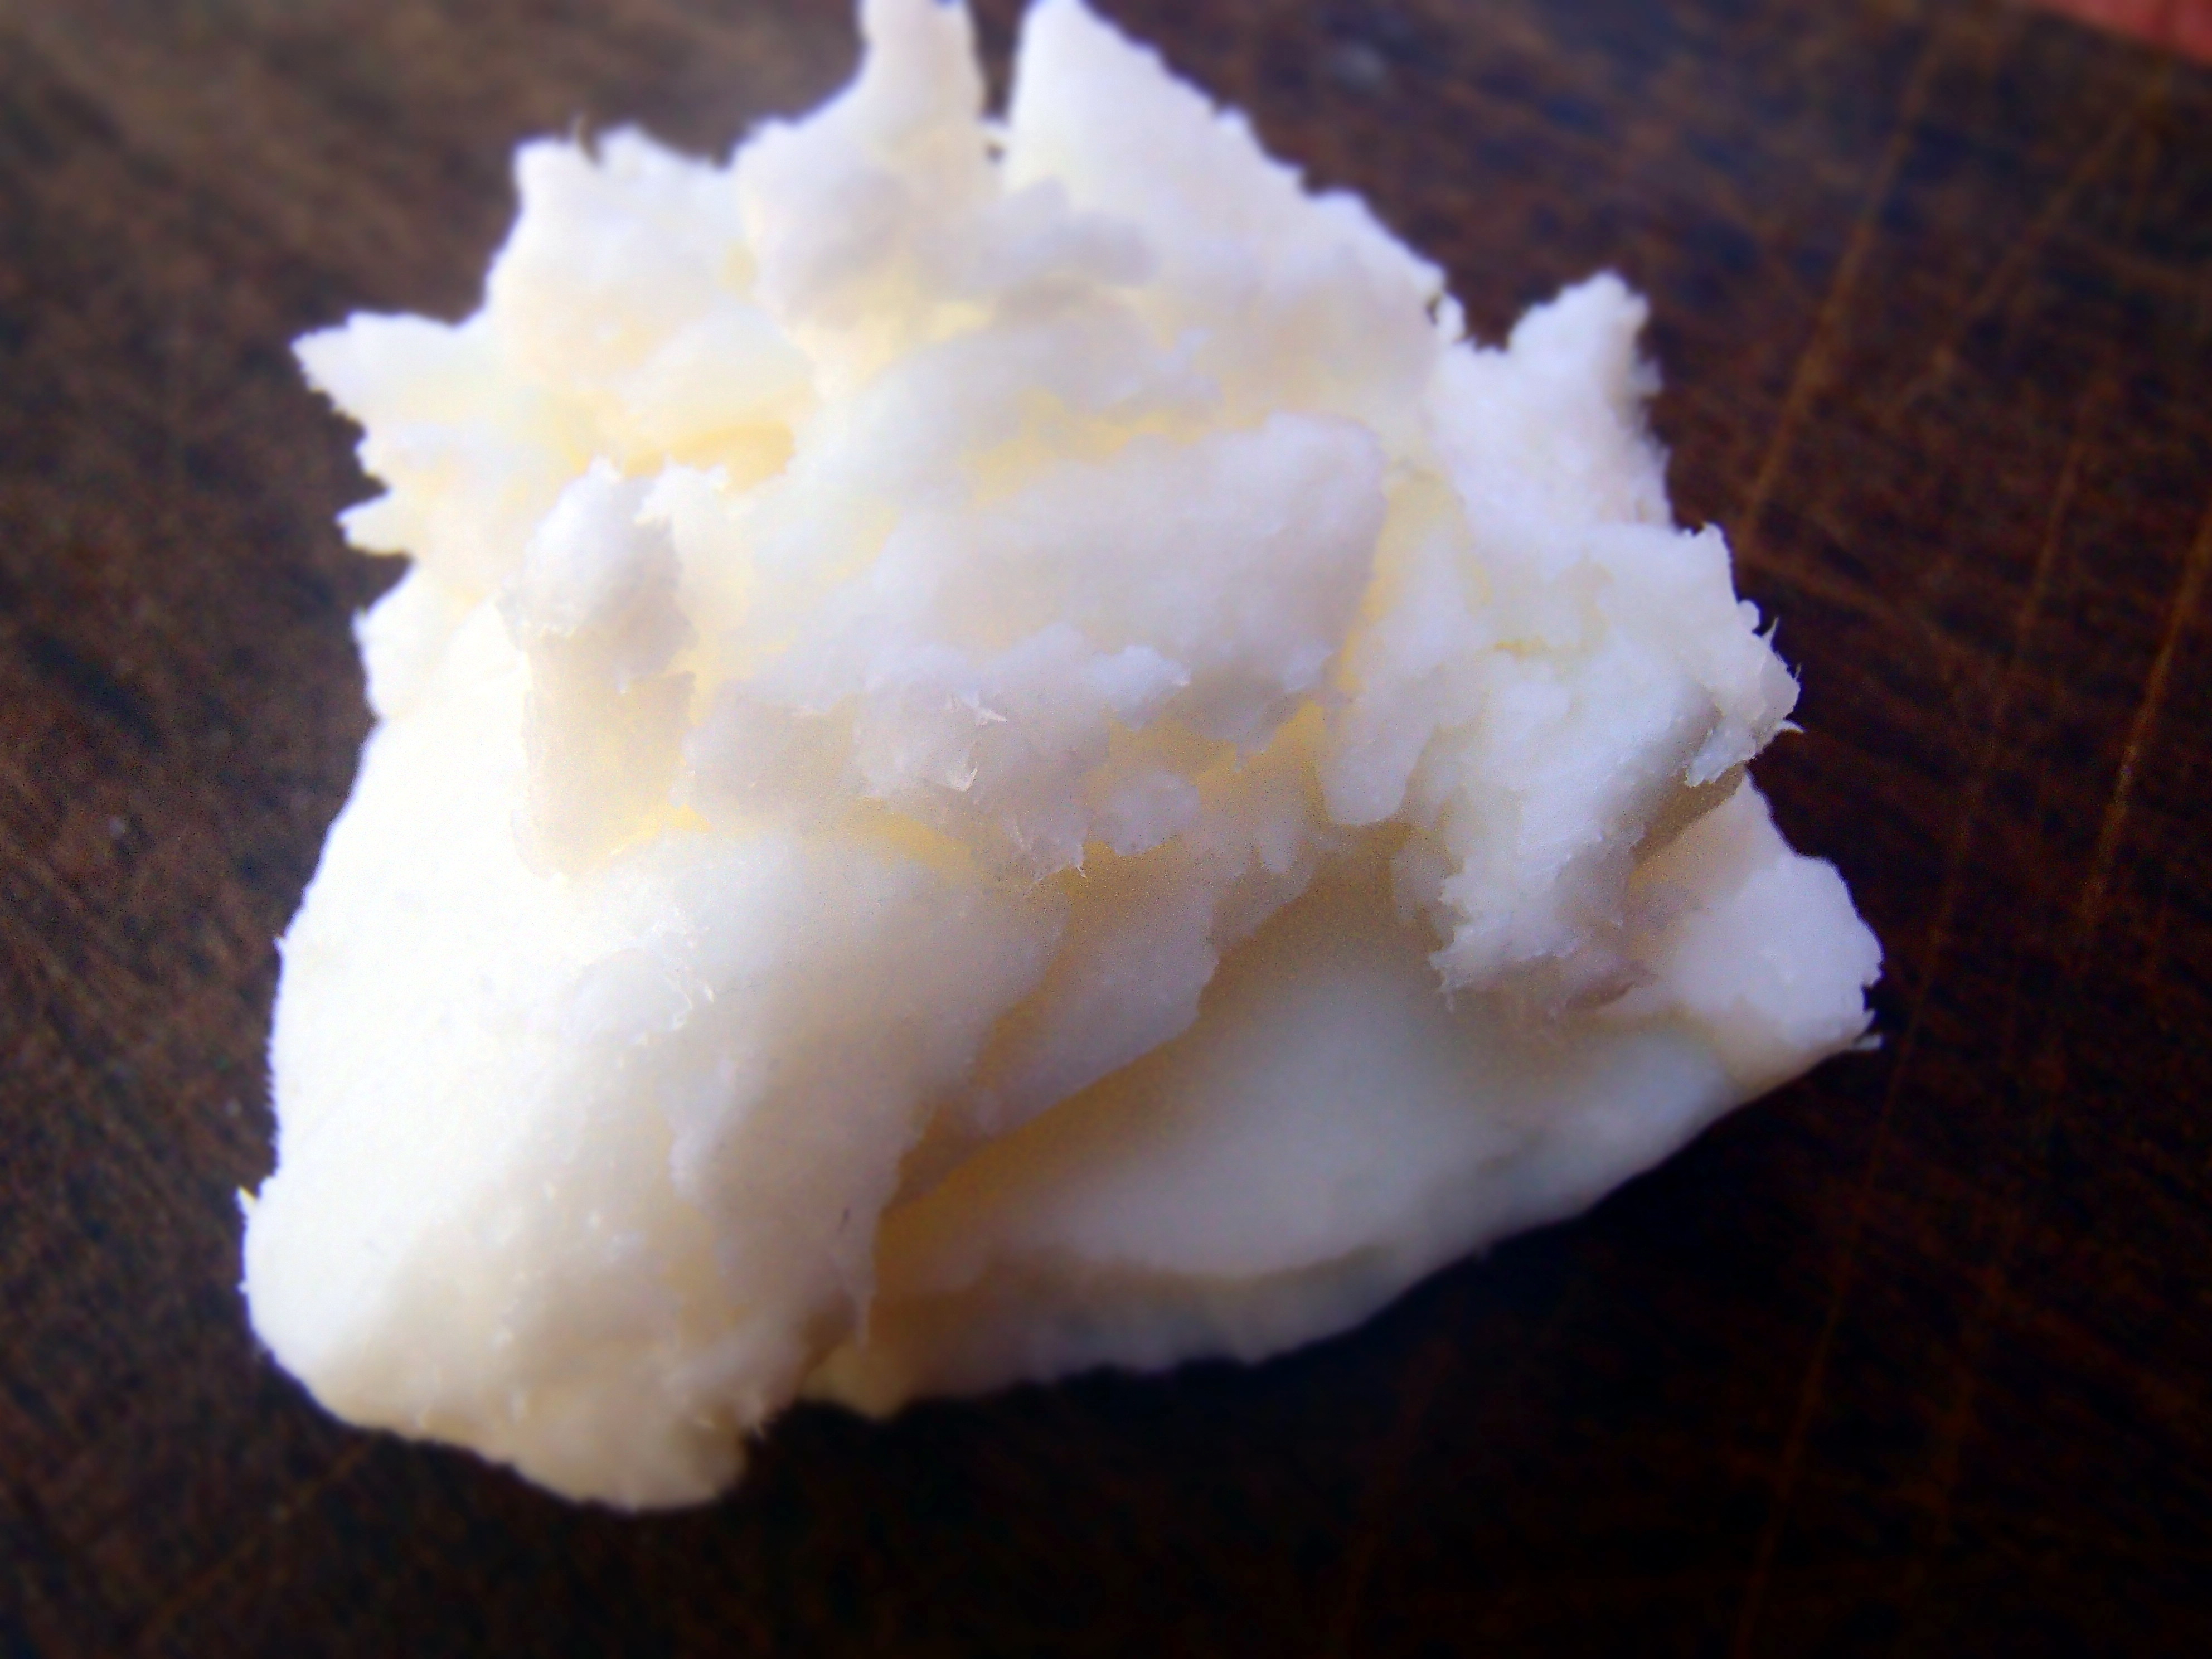 Shea butter - refined